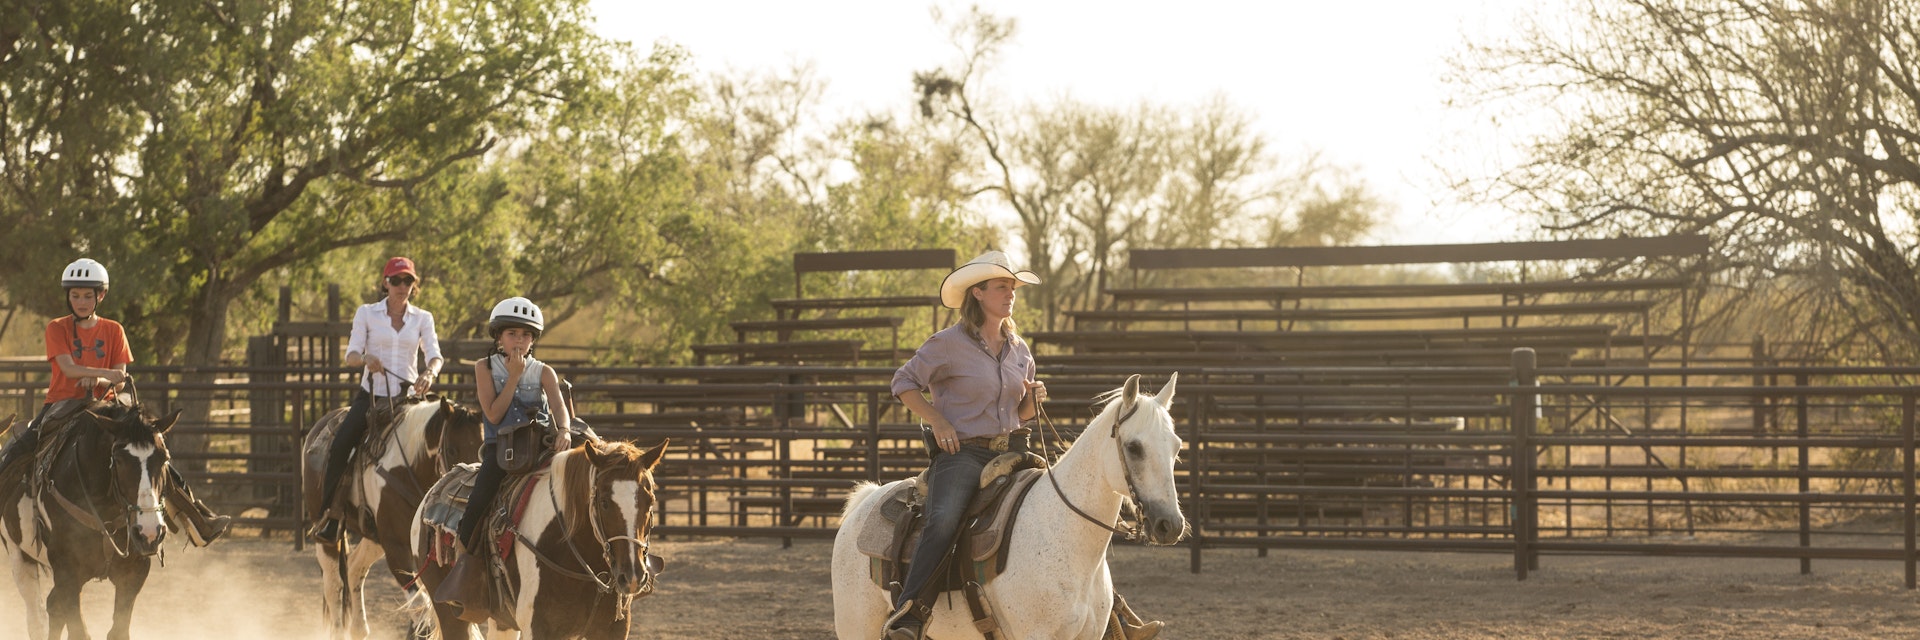 Horseback riding lesson at White Stallion Ranch in Tucson, Arizona.